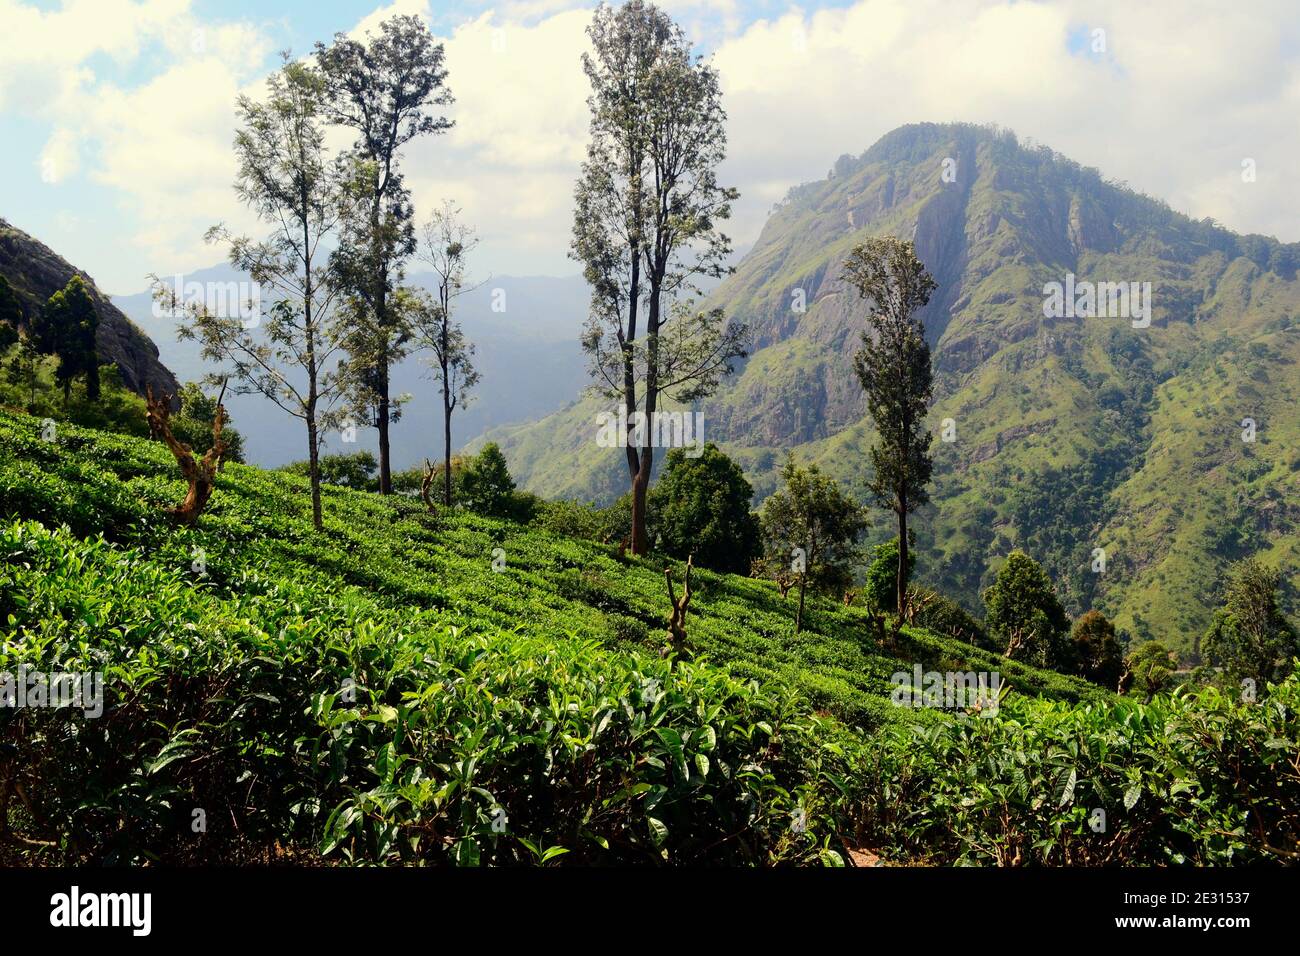 Tea plantations in the mountains. Terraced fields of Ceylon tea plants on the hills near Ella, Sri Lanka. View to the Ella Rock peak Stock Photo